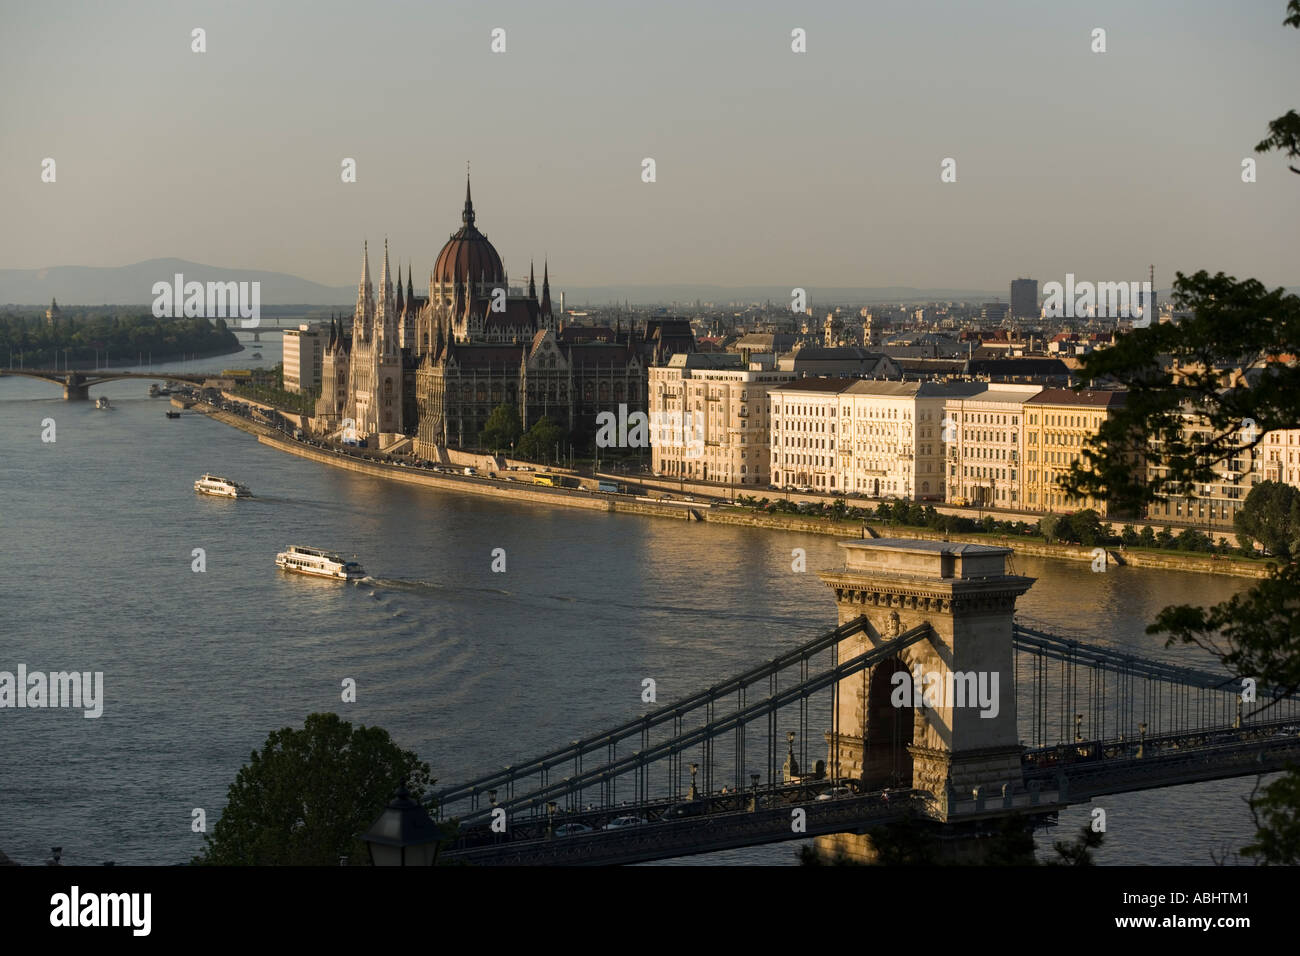 The Parliament Szechenyi Chain Bridge Leisure Boats on River Danube Pest Budapest Stock Photo